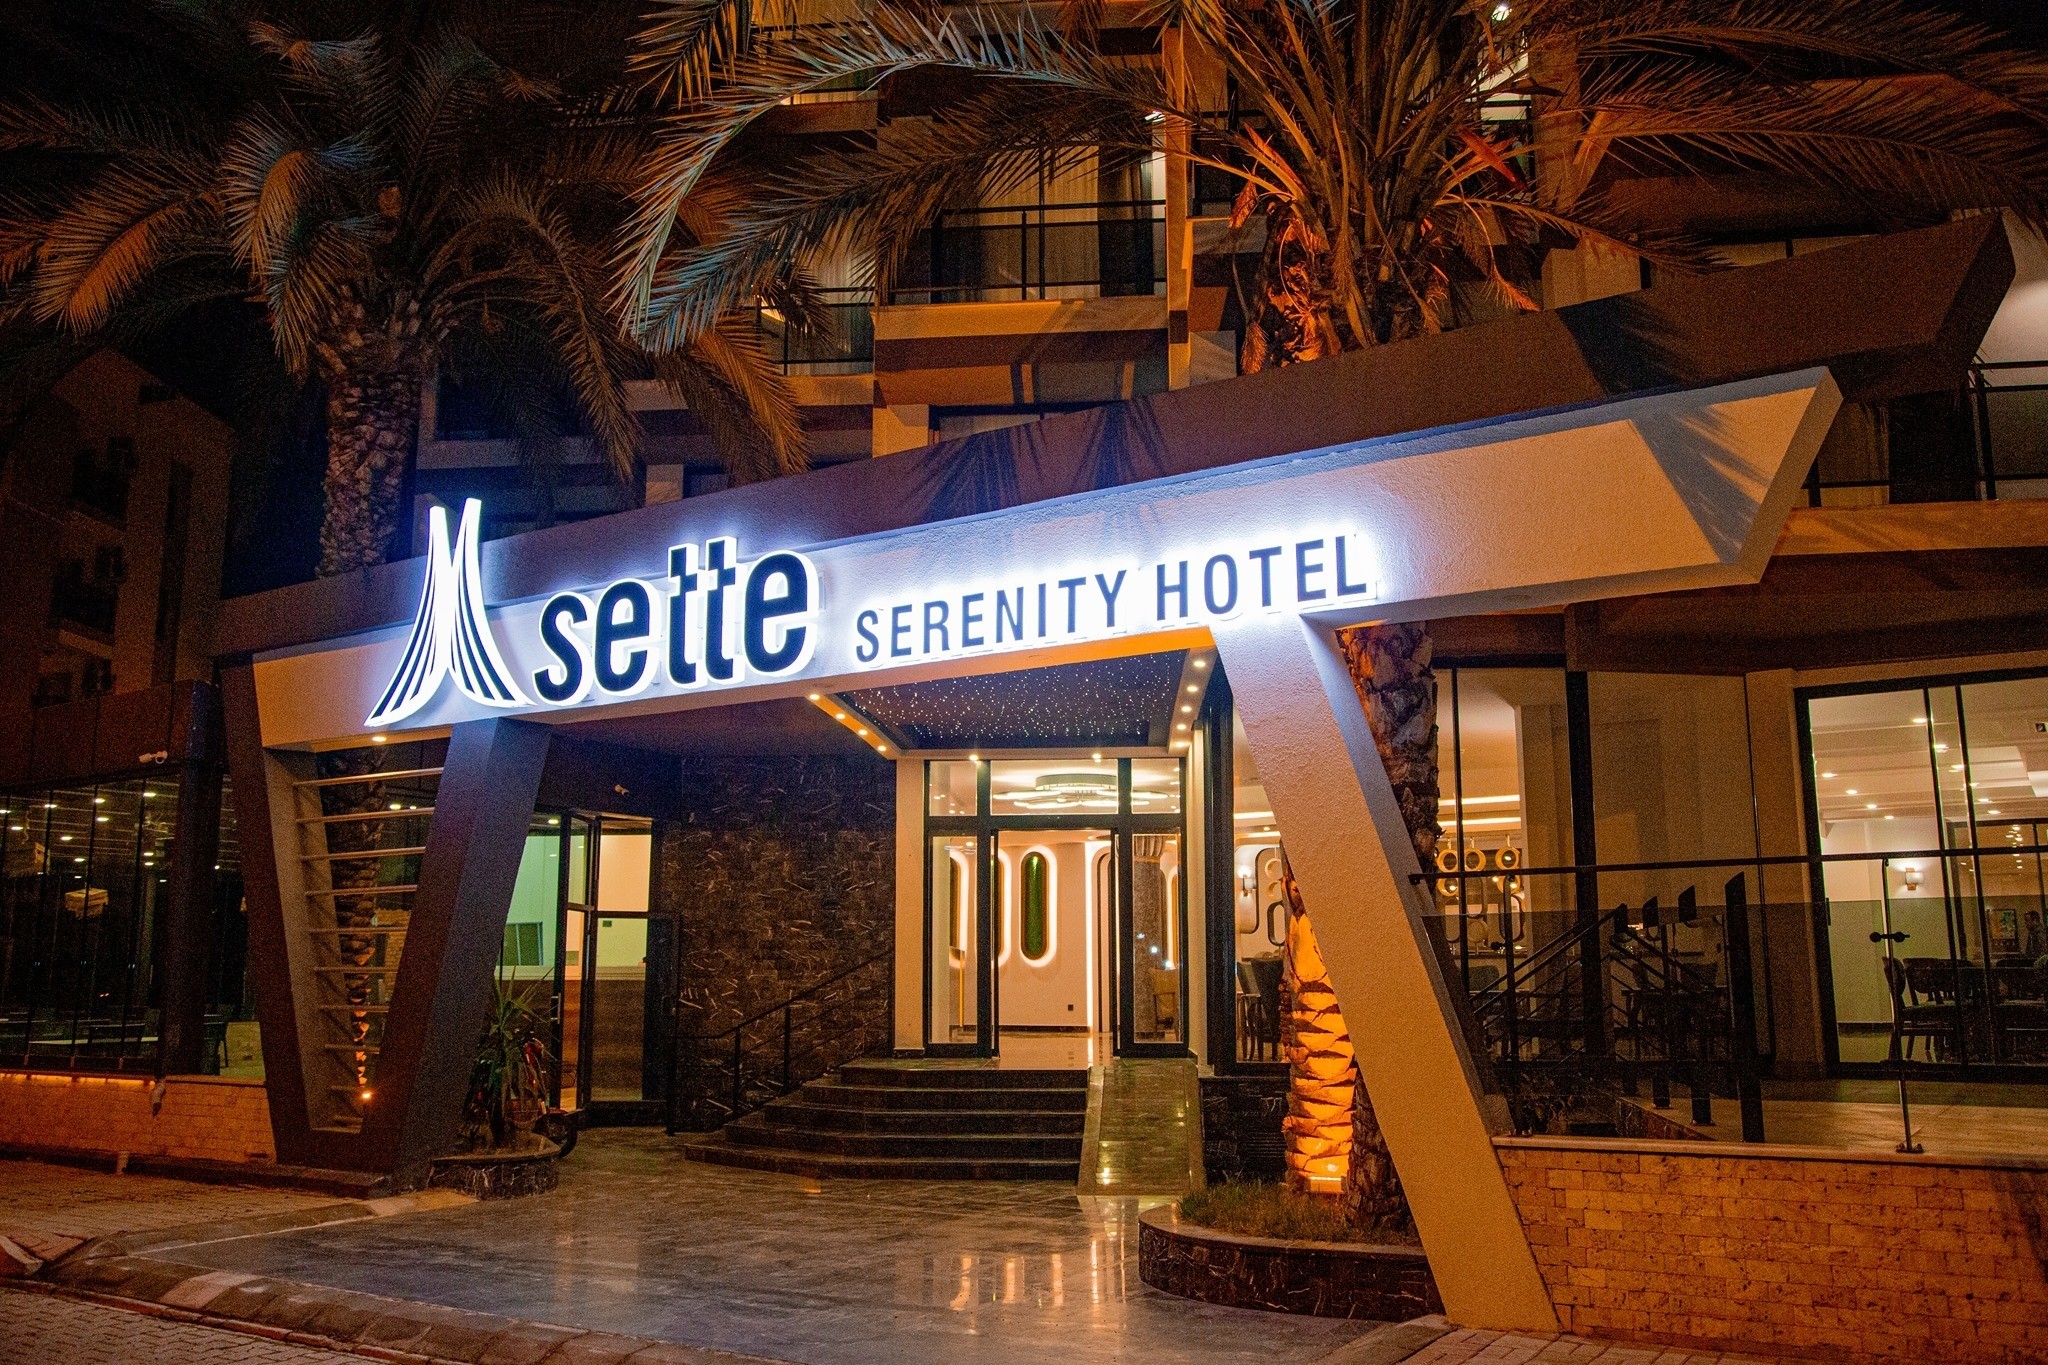                         Sette Serenity Hotel
                        